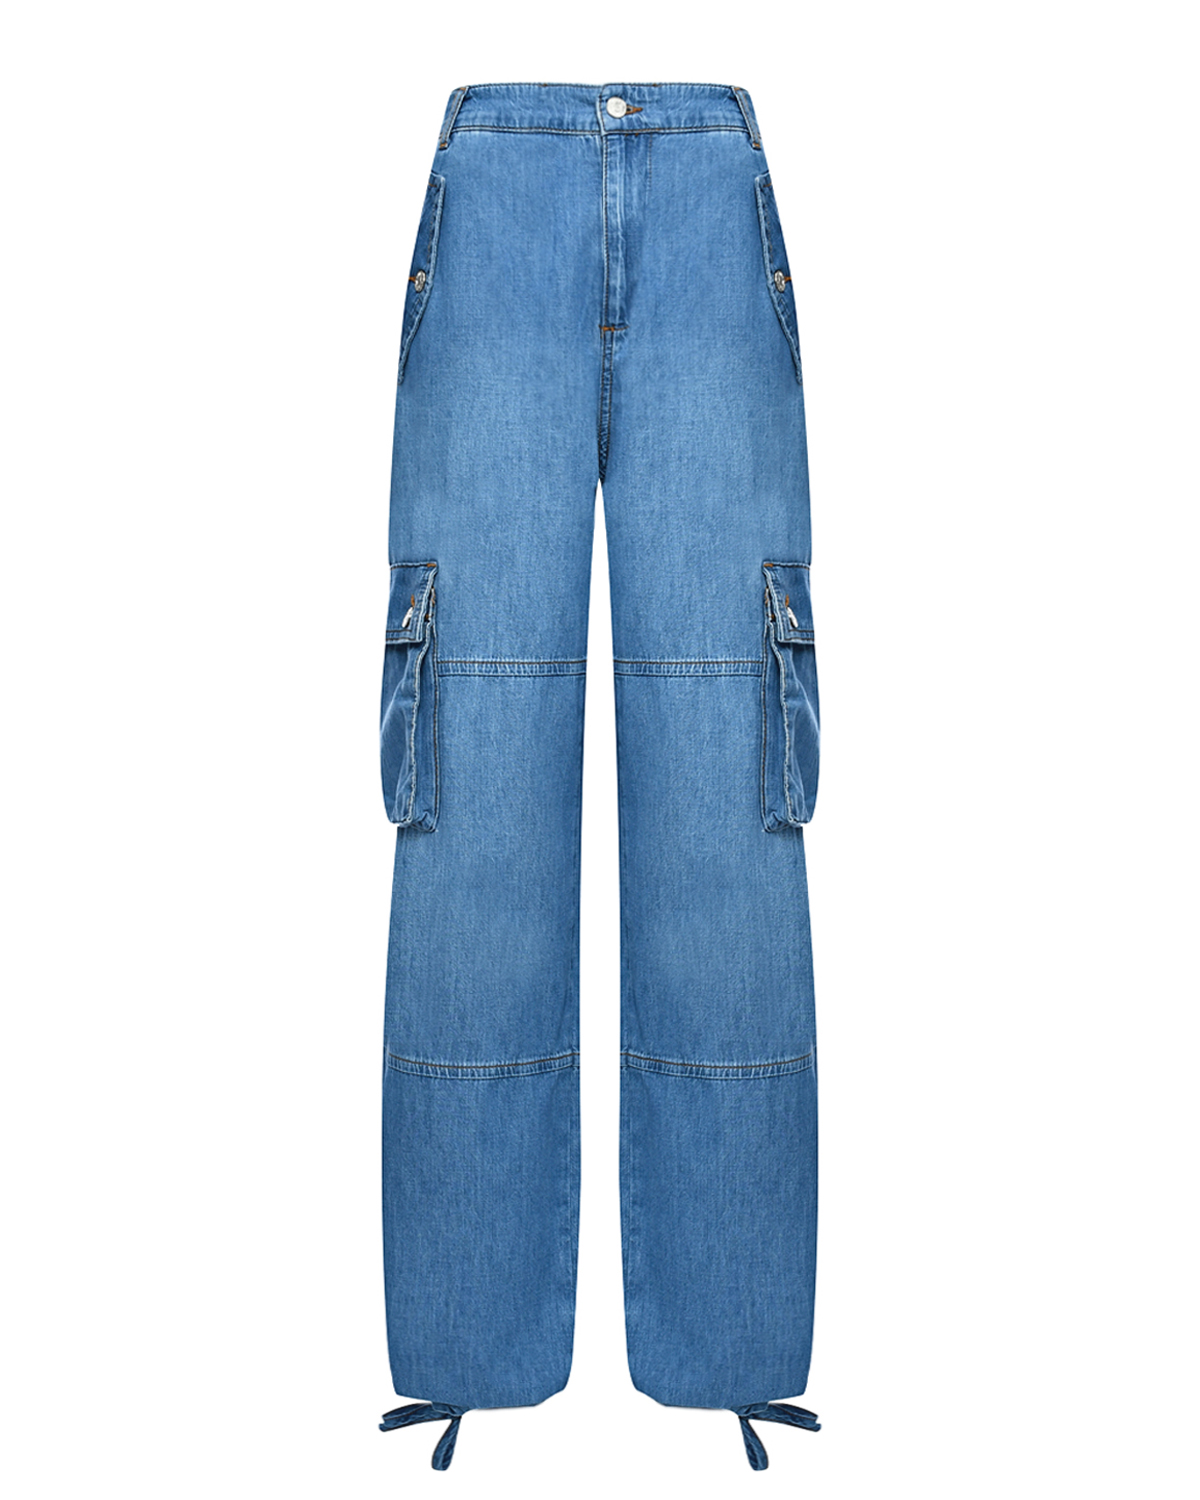 Джинсы с карманами-карго, синие Mo5ch1no Jeans